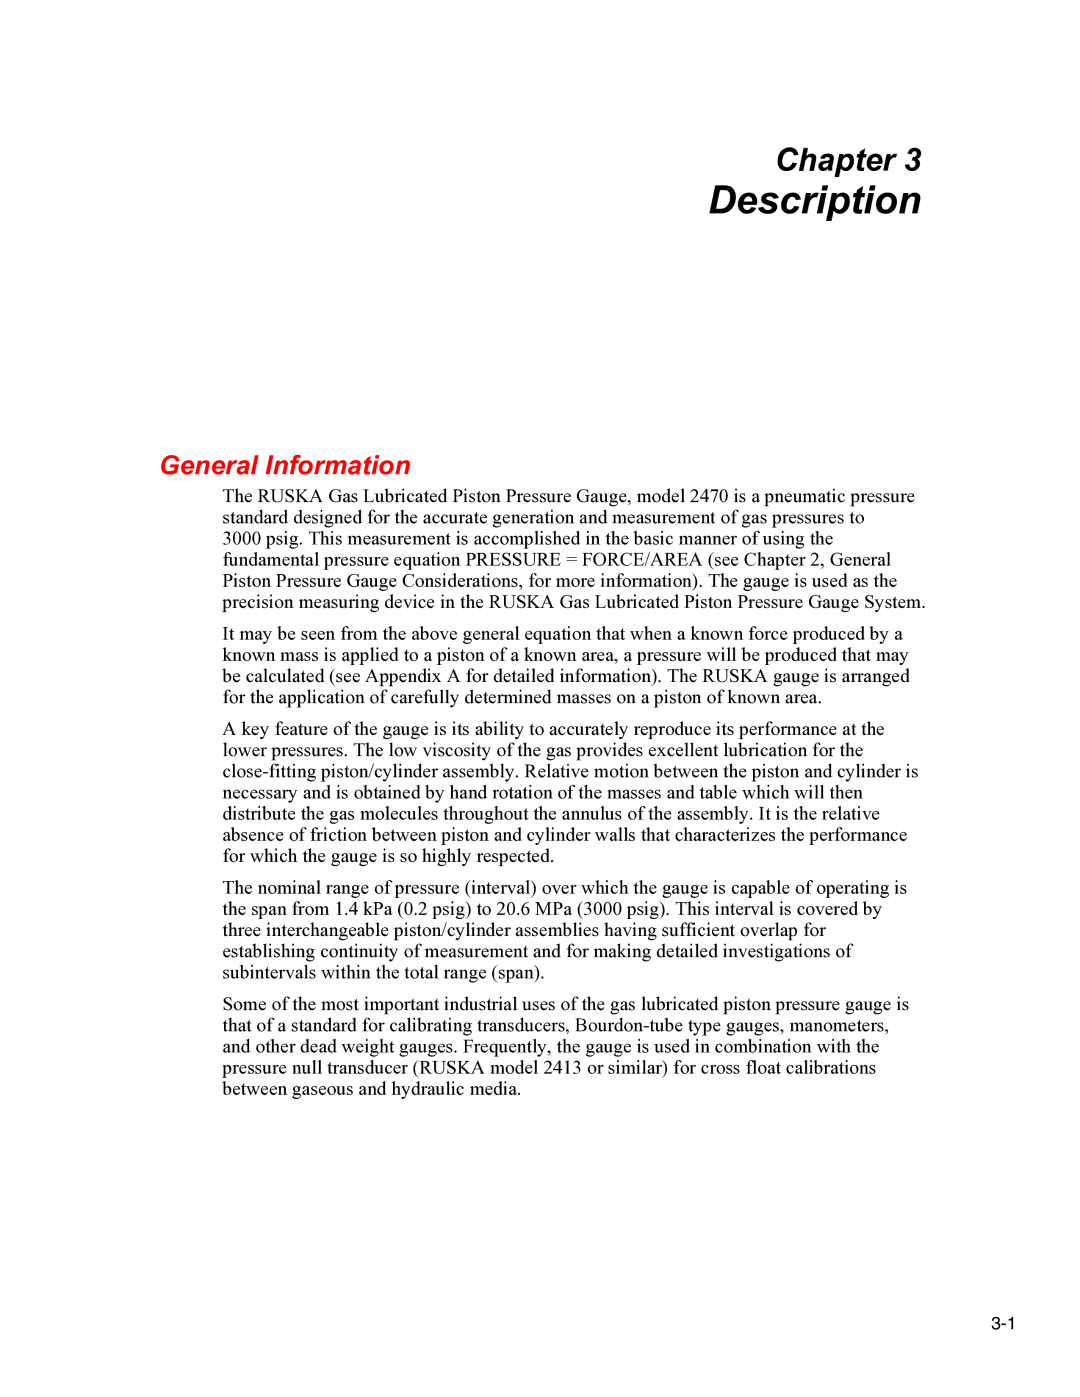 Fluke 2470 specifications Description, General Information 